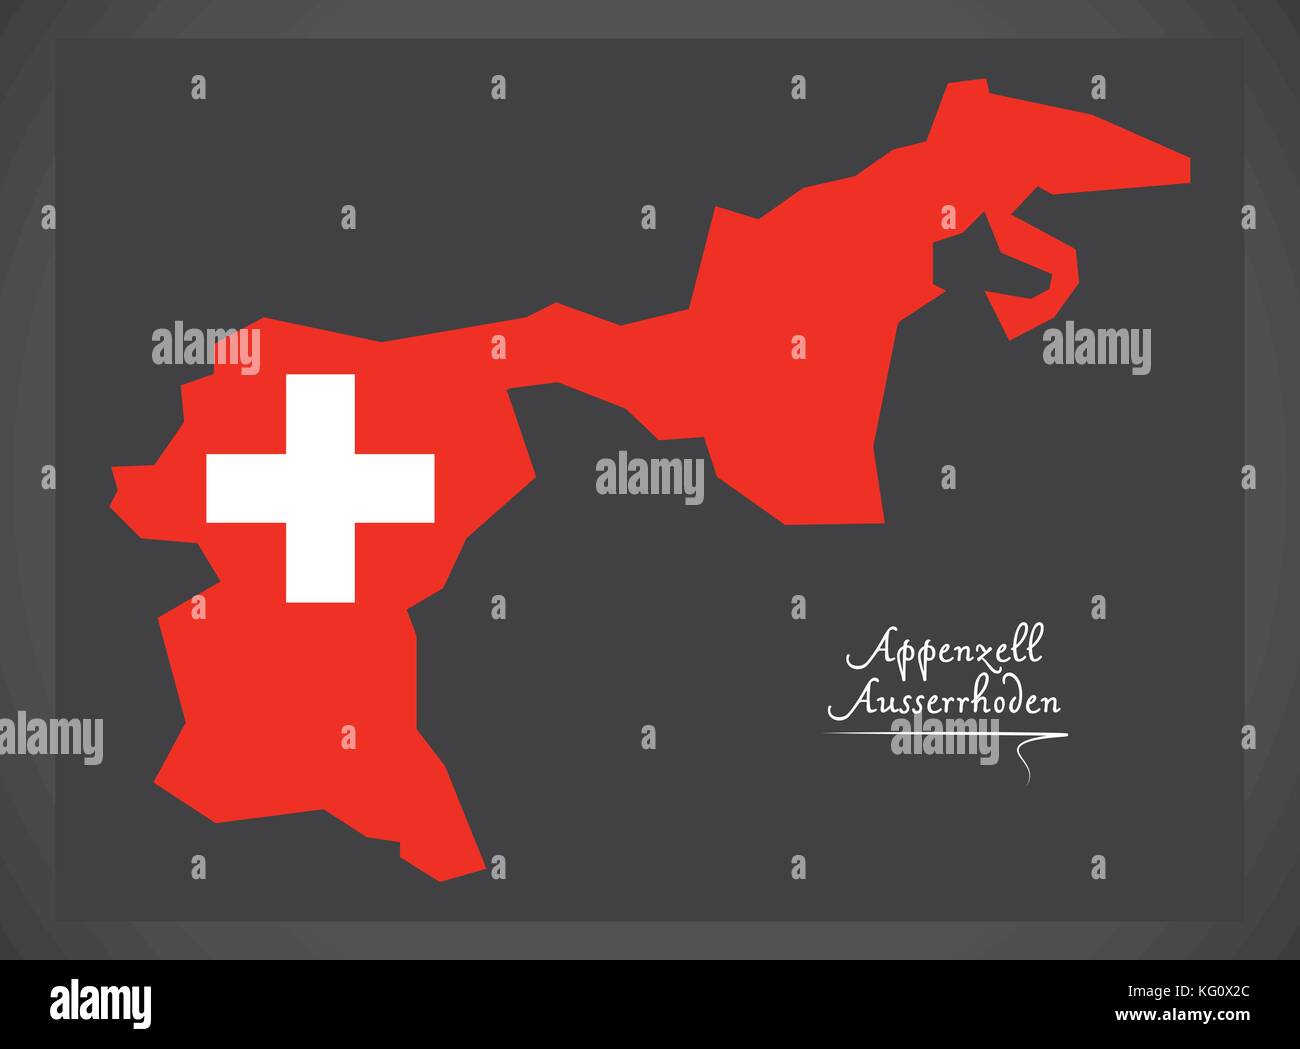 Appenzell Ausserrhoden map of Switzerland with Swiss national flag illustration Stock Vector